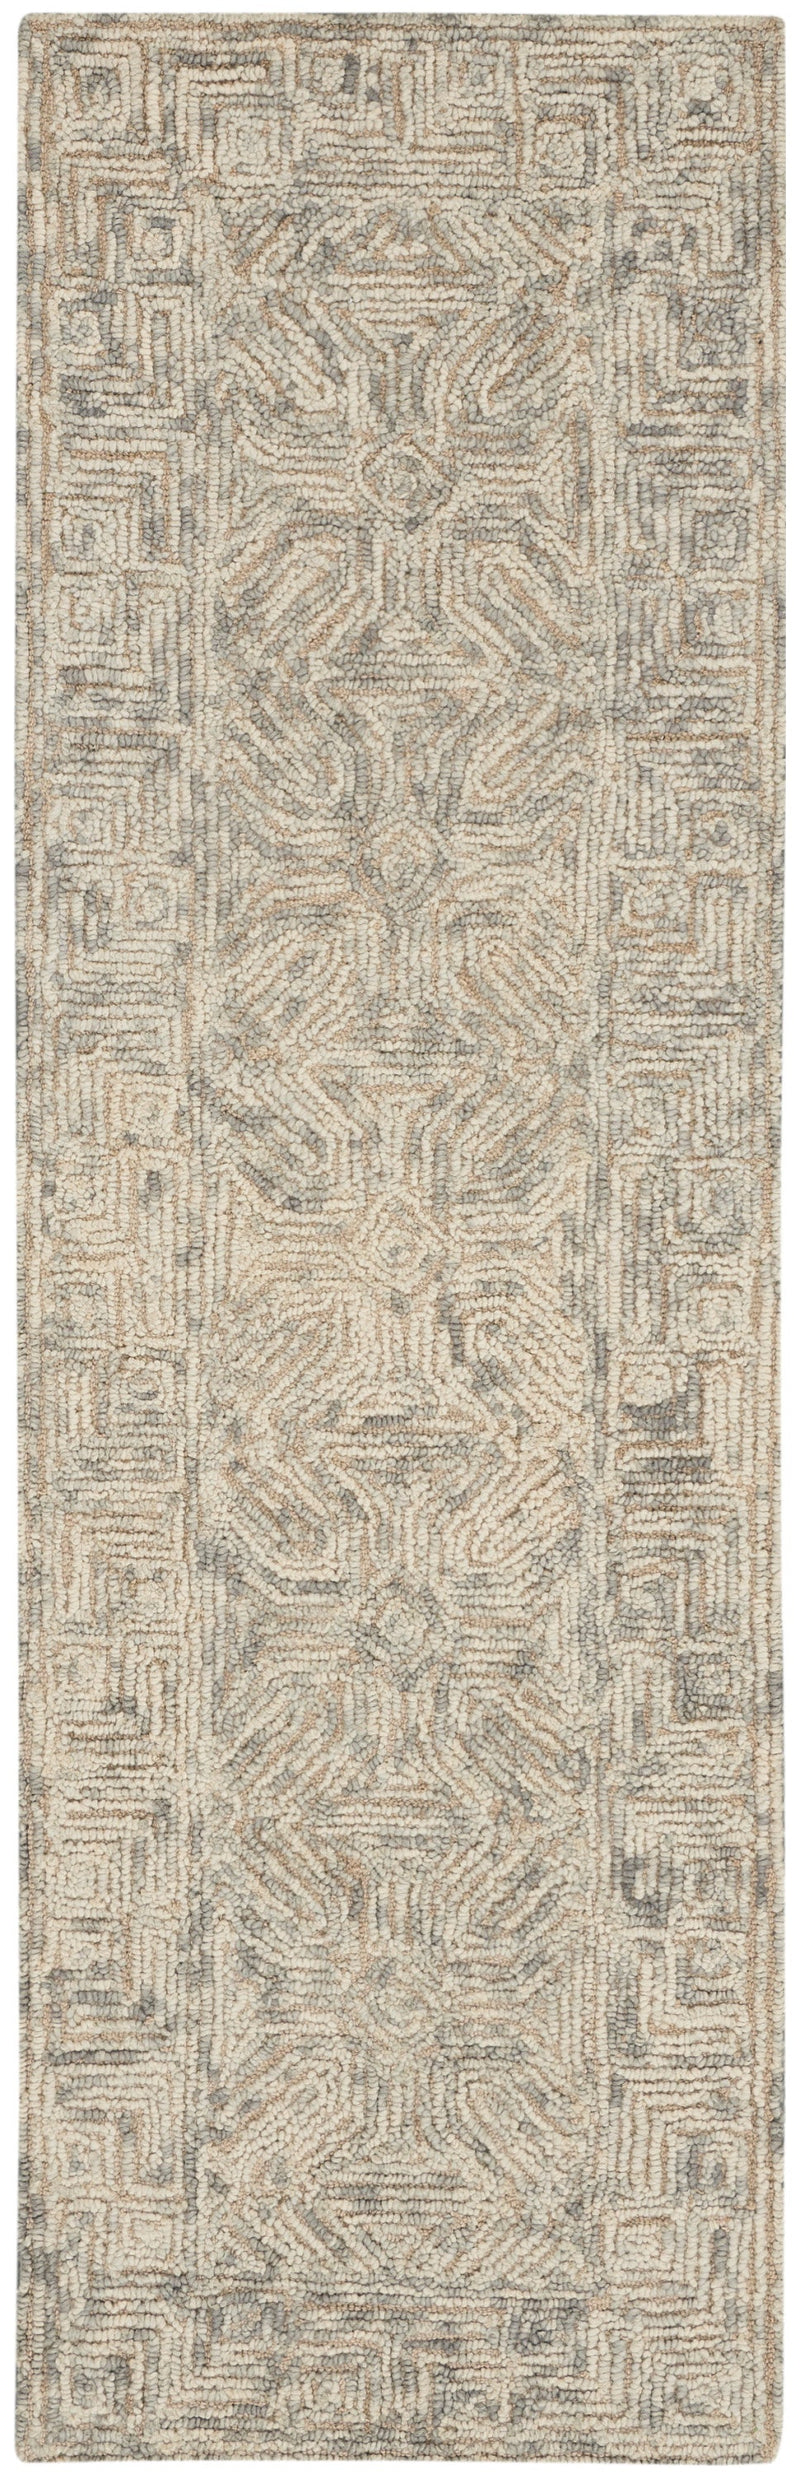 media image for colorado handmade beige grey rug by nourison 99446790316 redo 2 272